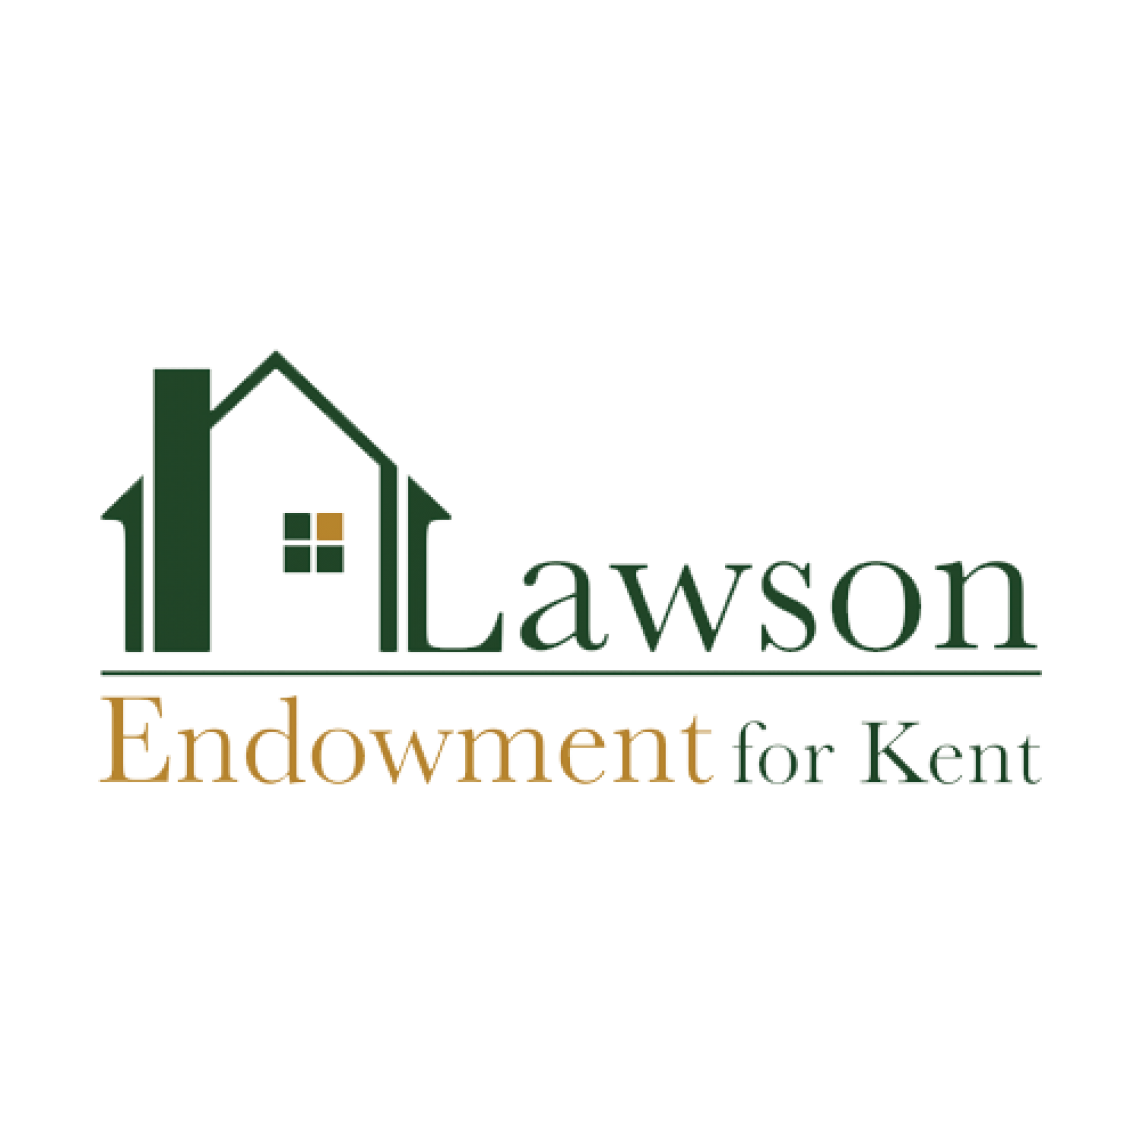 Lawson Endowment for Kent logo